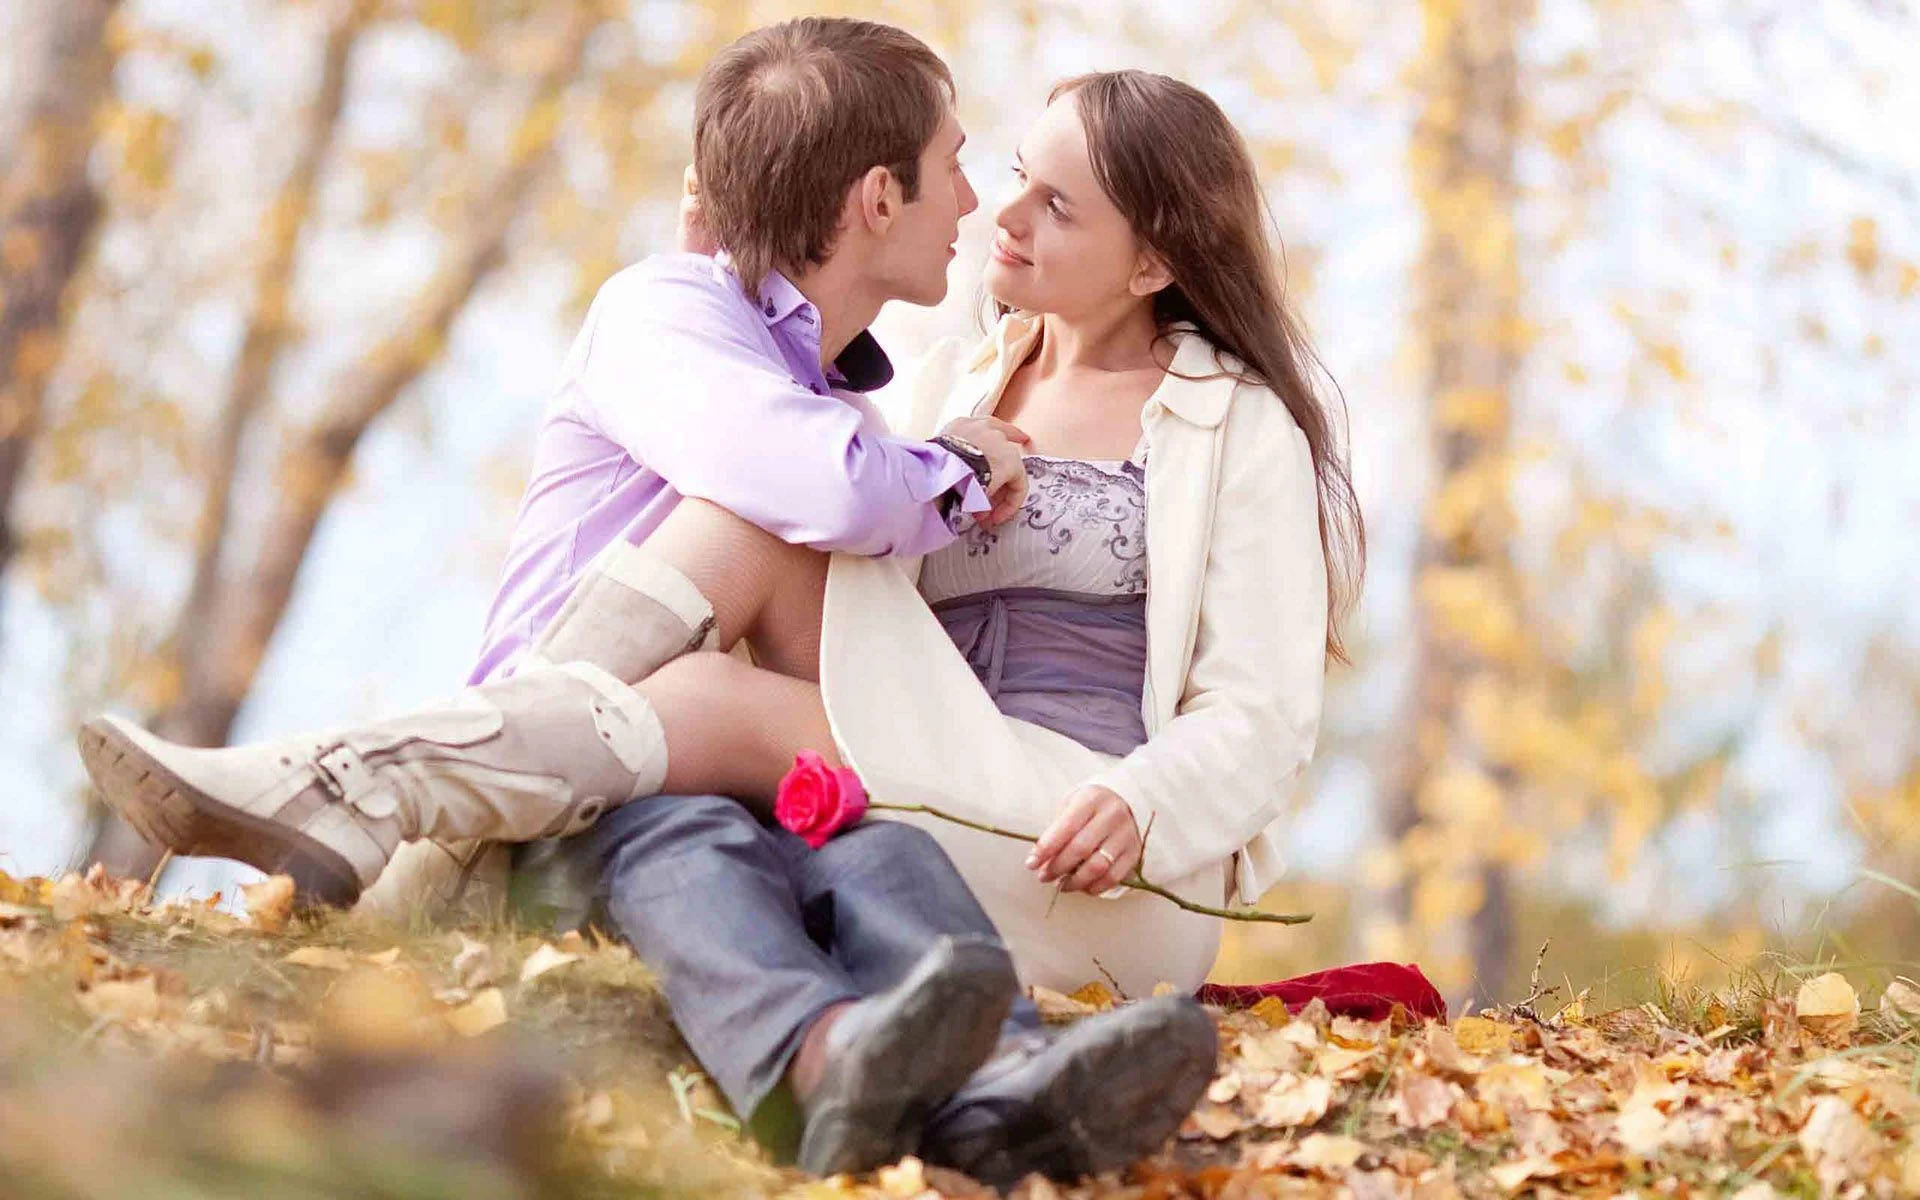 Romantic Love In Fall Season Background